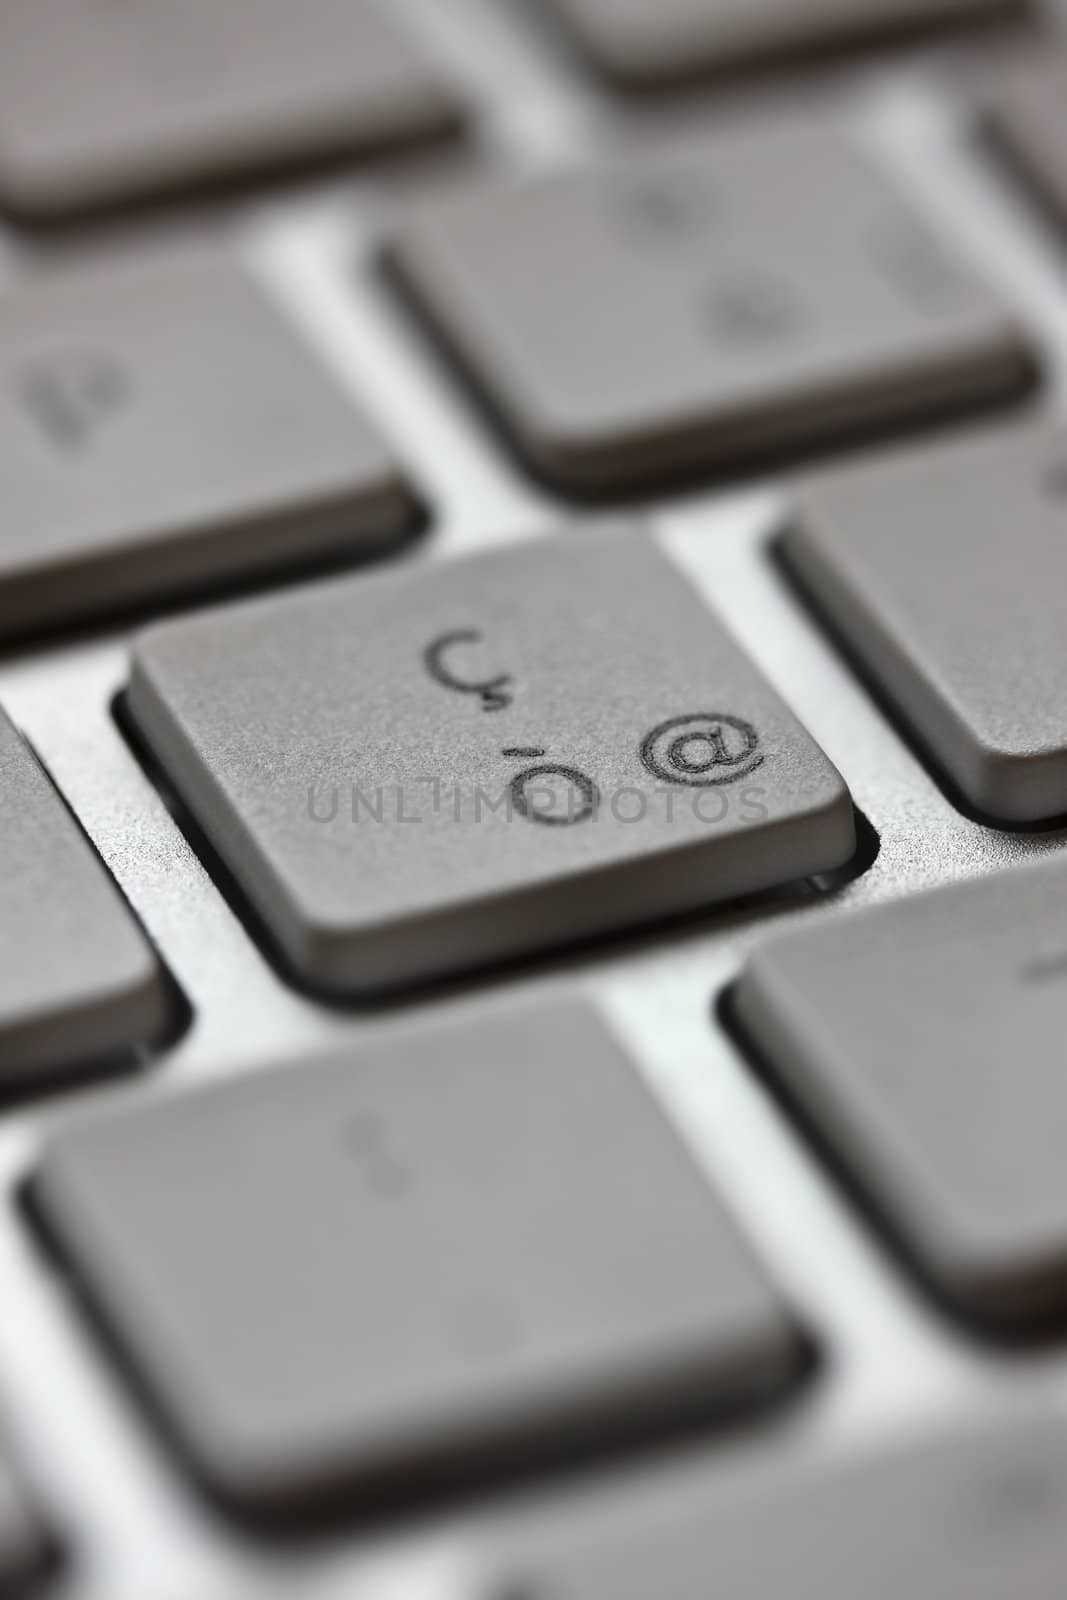 Computer keyboard closeup, internet